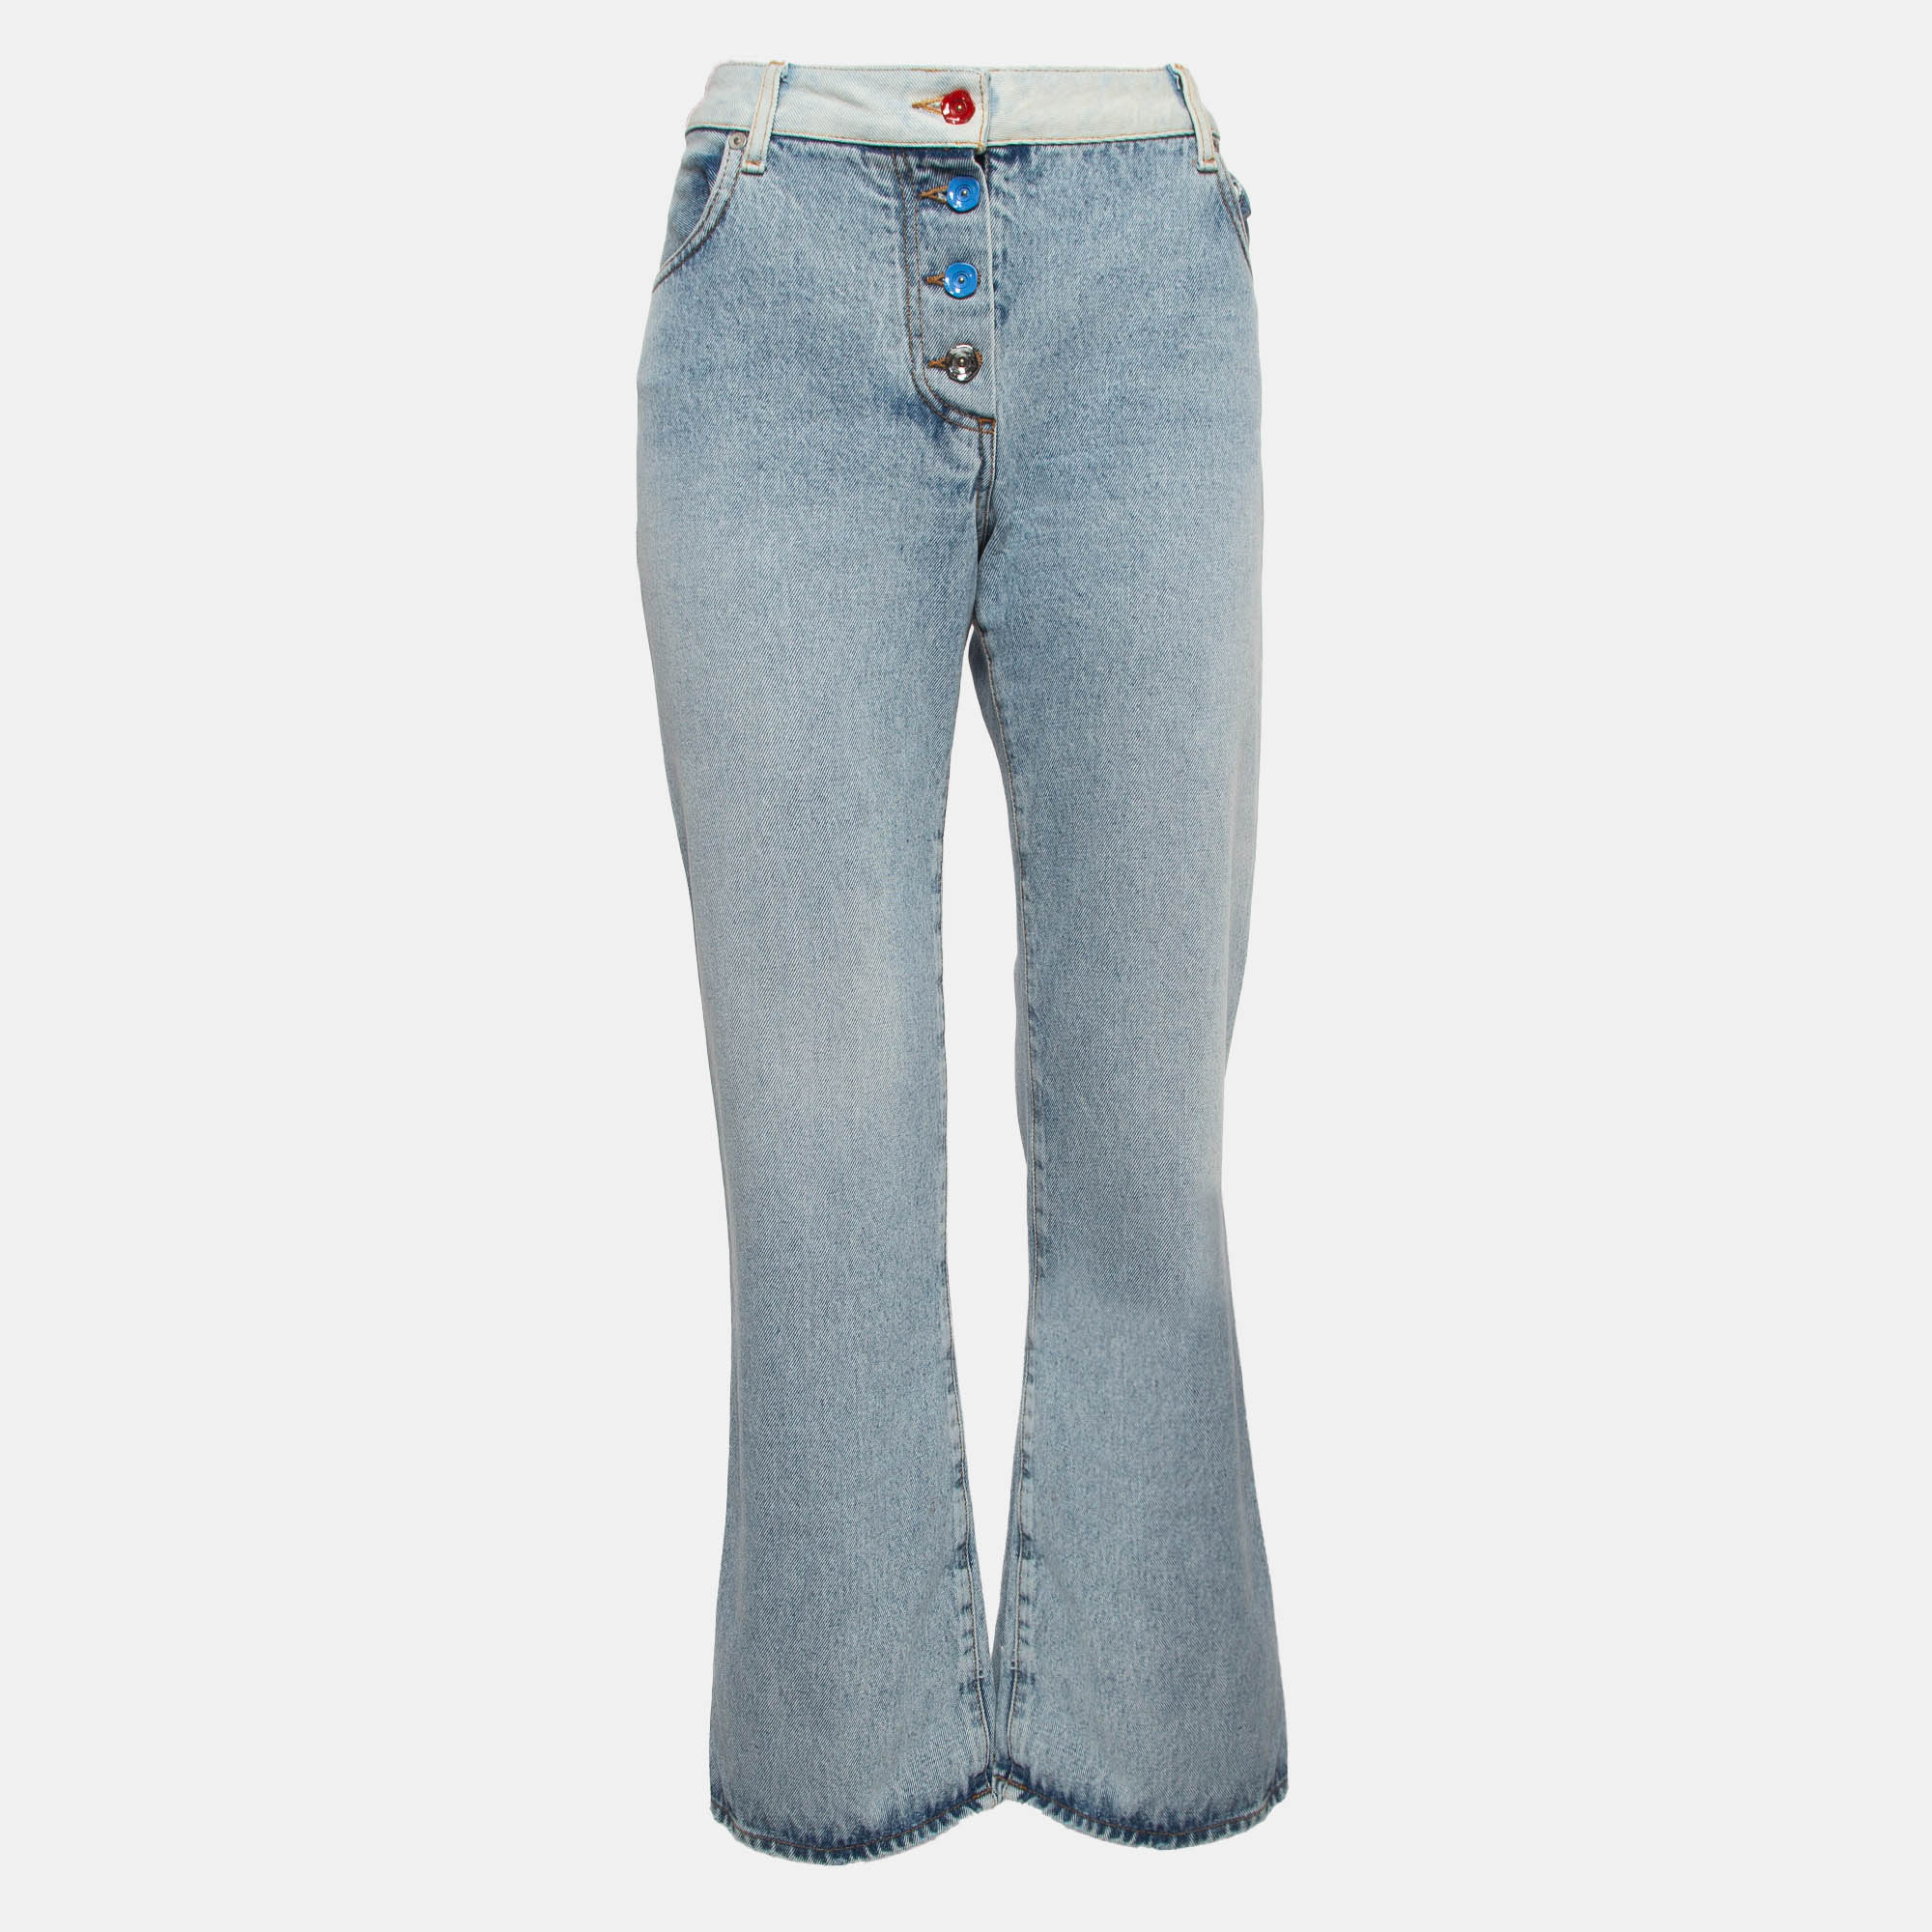 Off-white light blue denim buttoned jeans m waist 30"